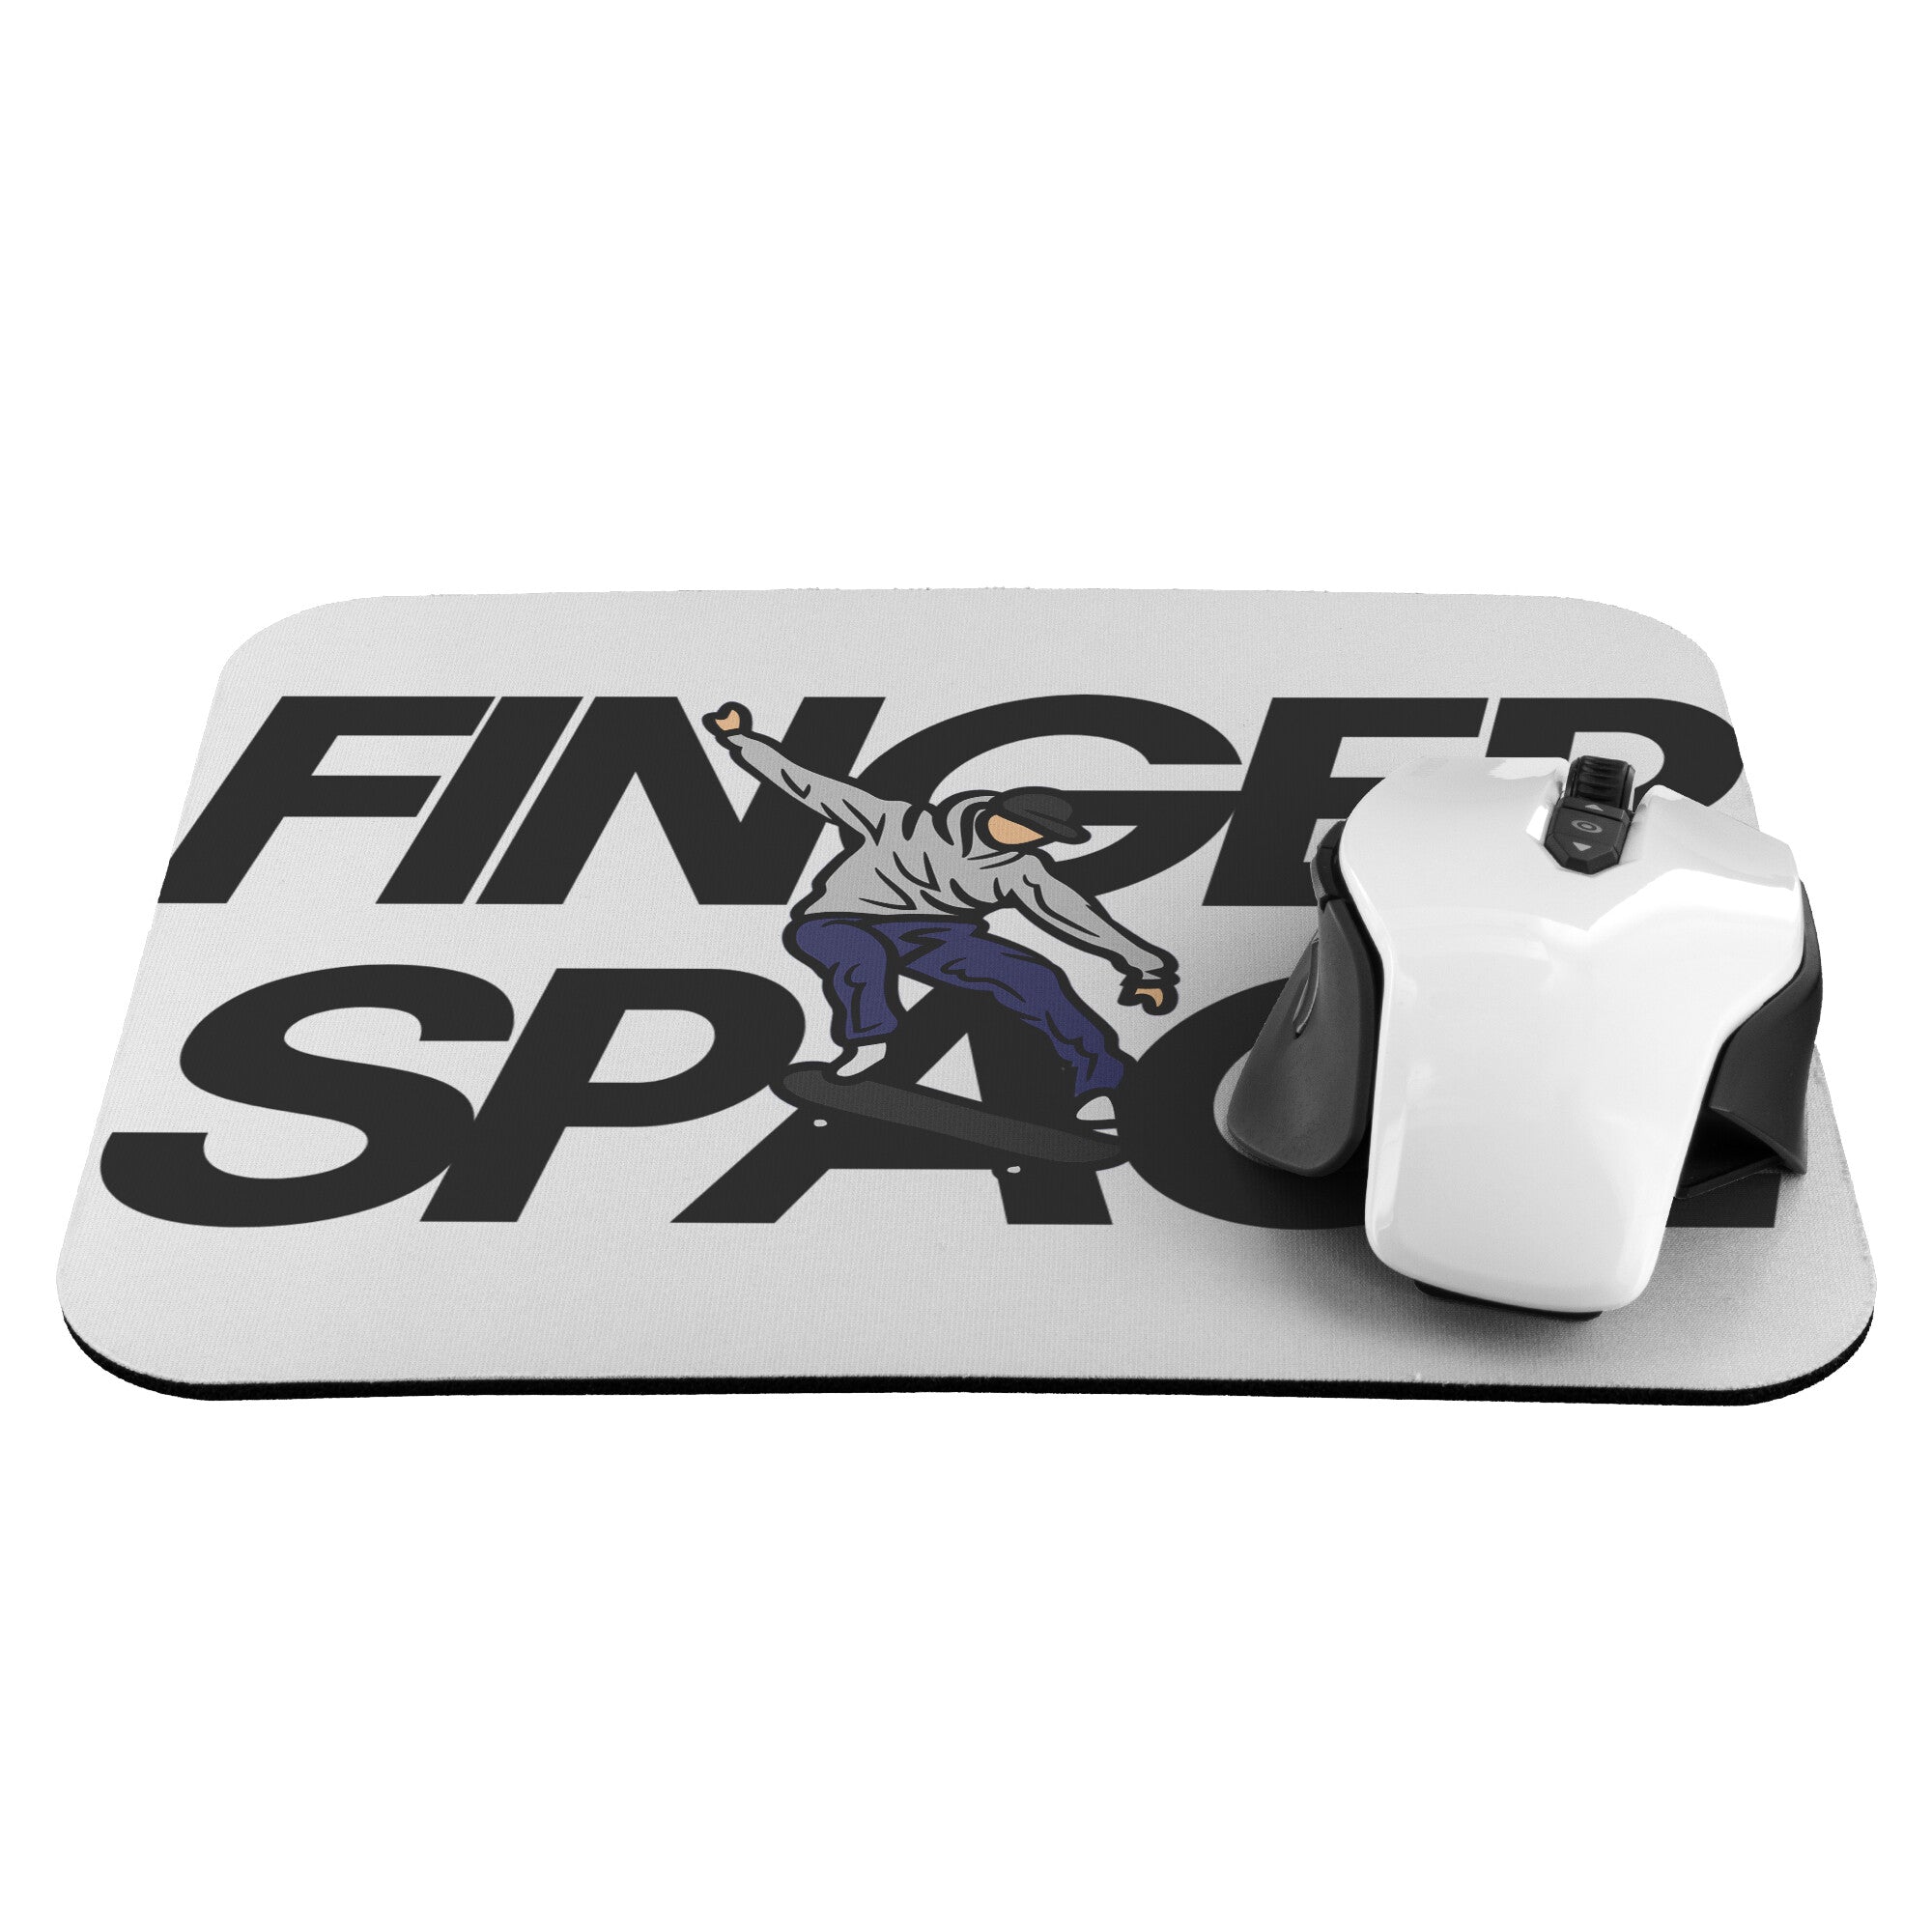 Skater Premium Mousepad by Finger Space